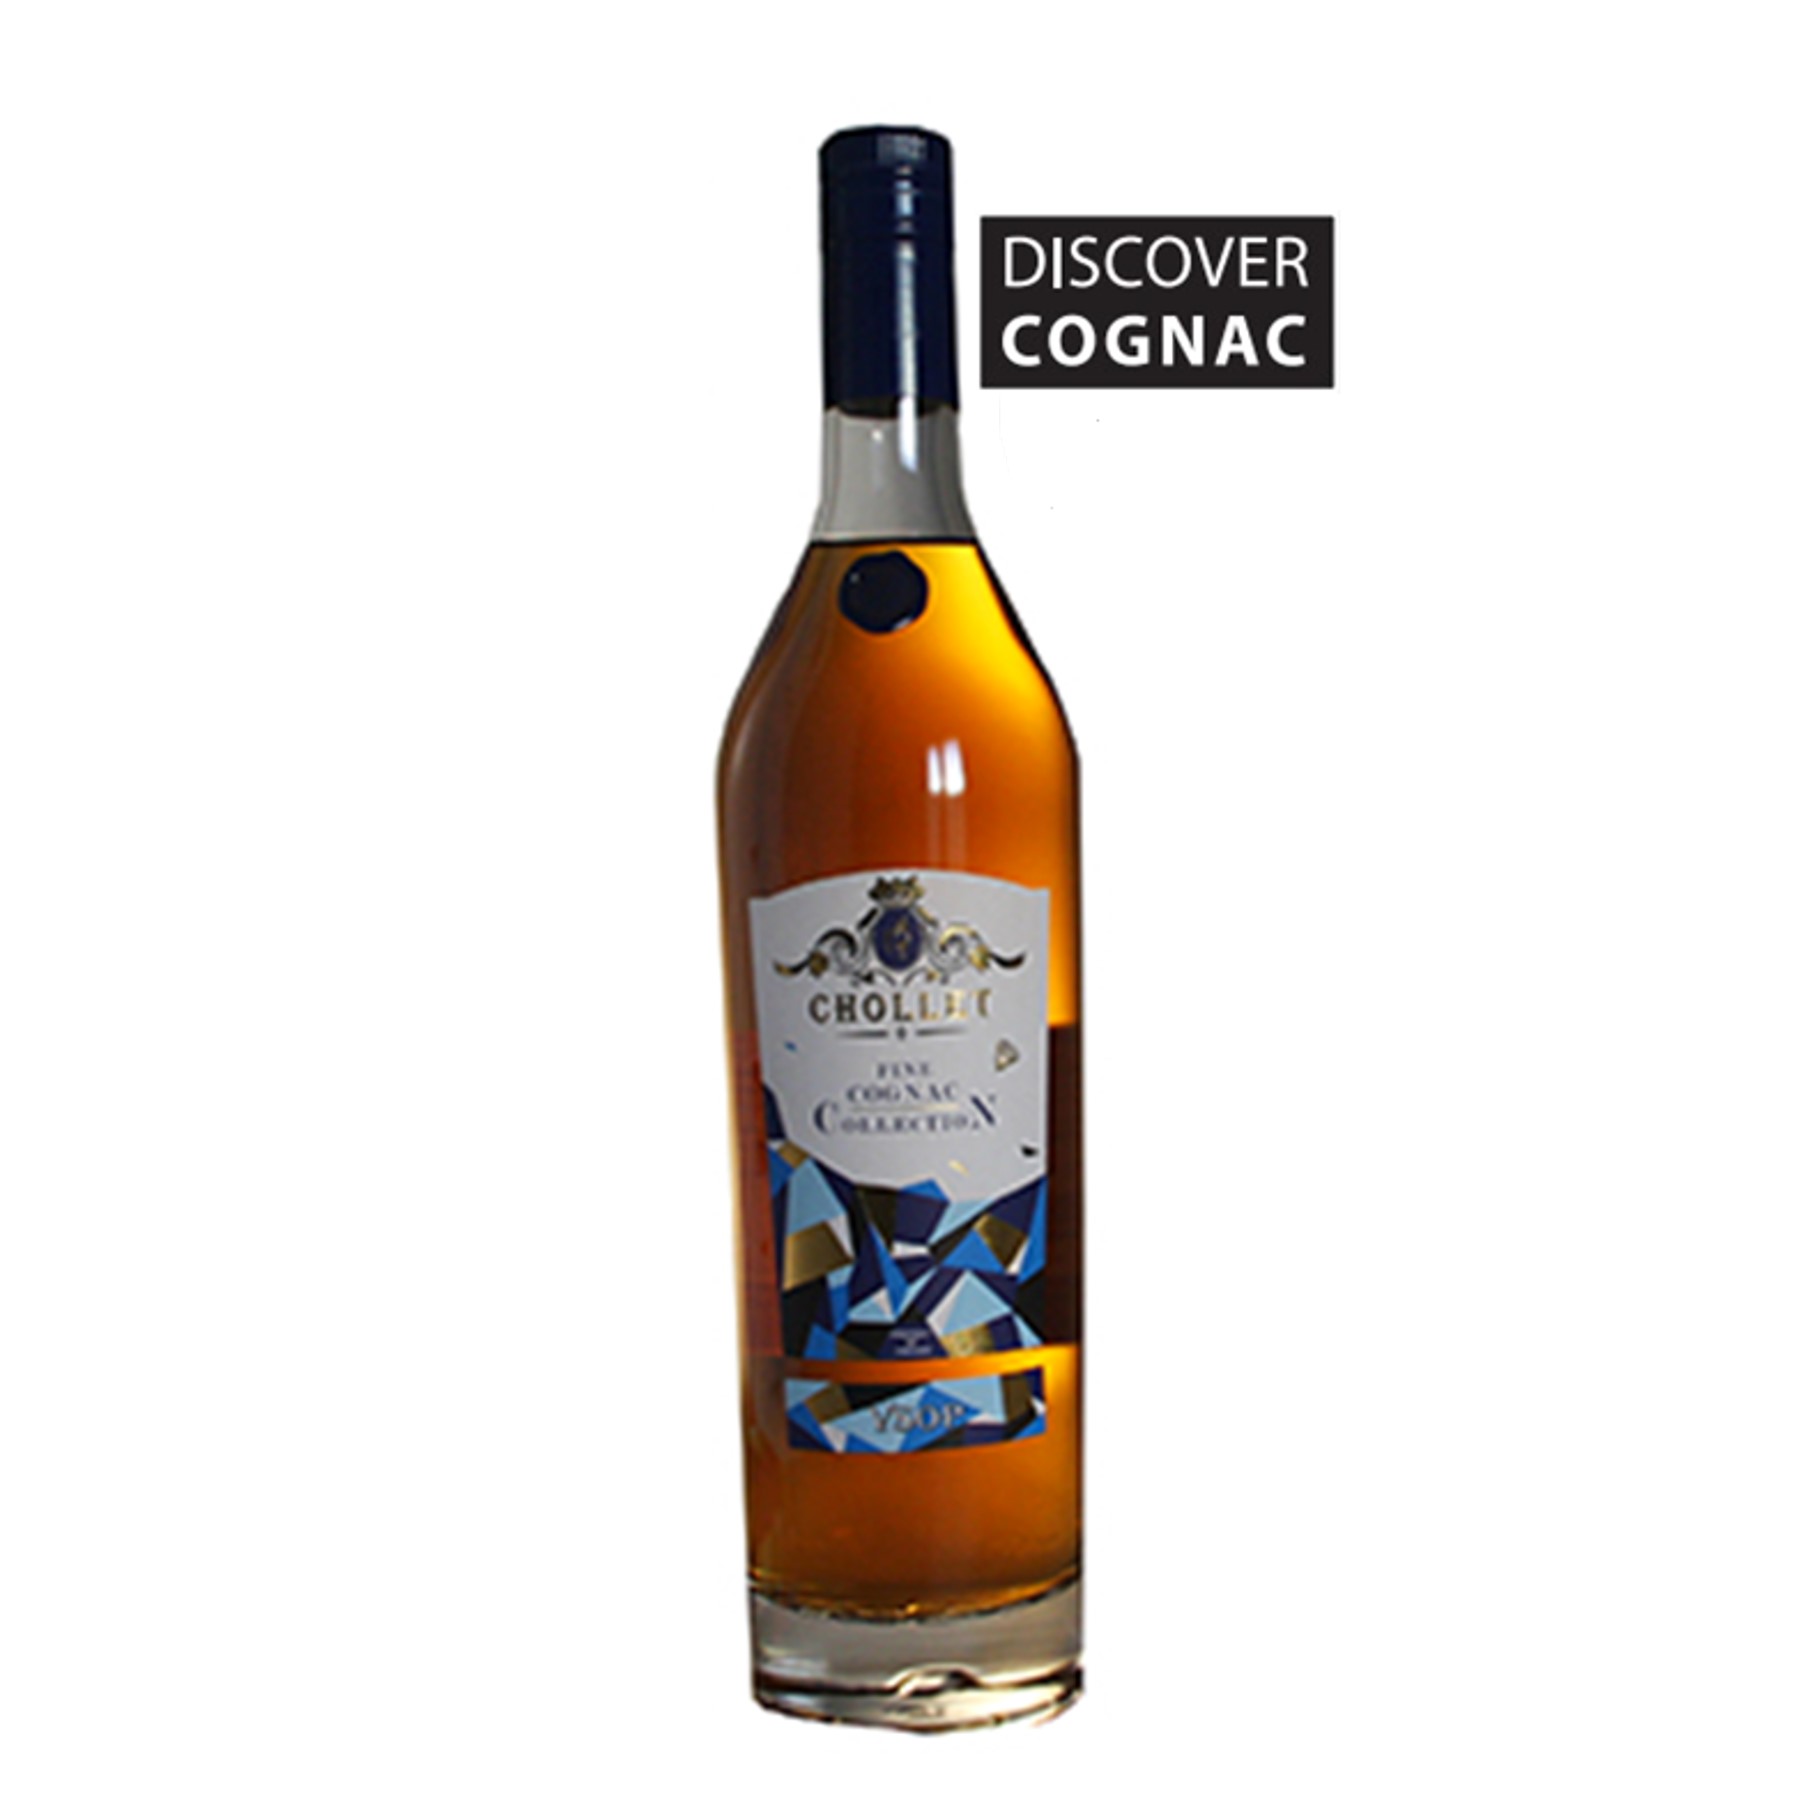 Chollet-VSOP Discover Cognac